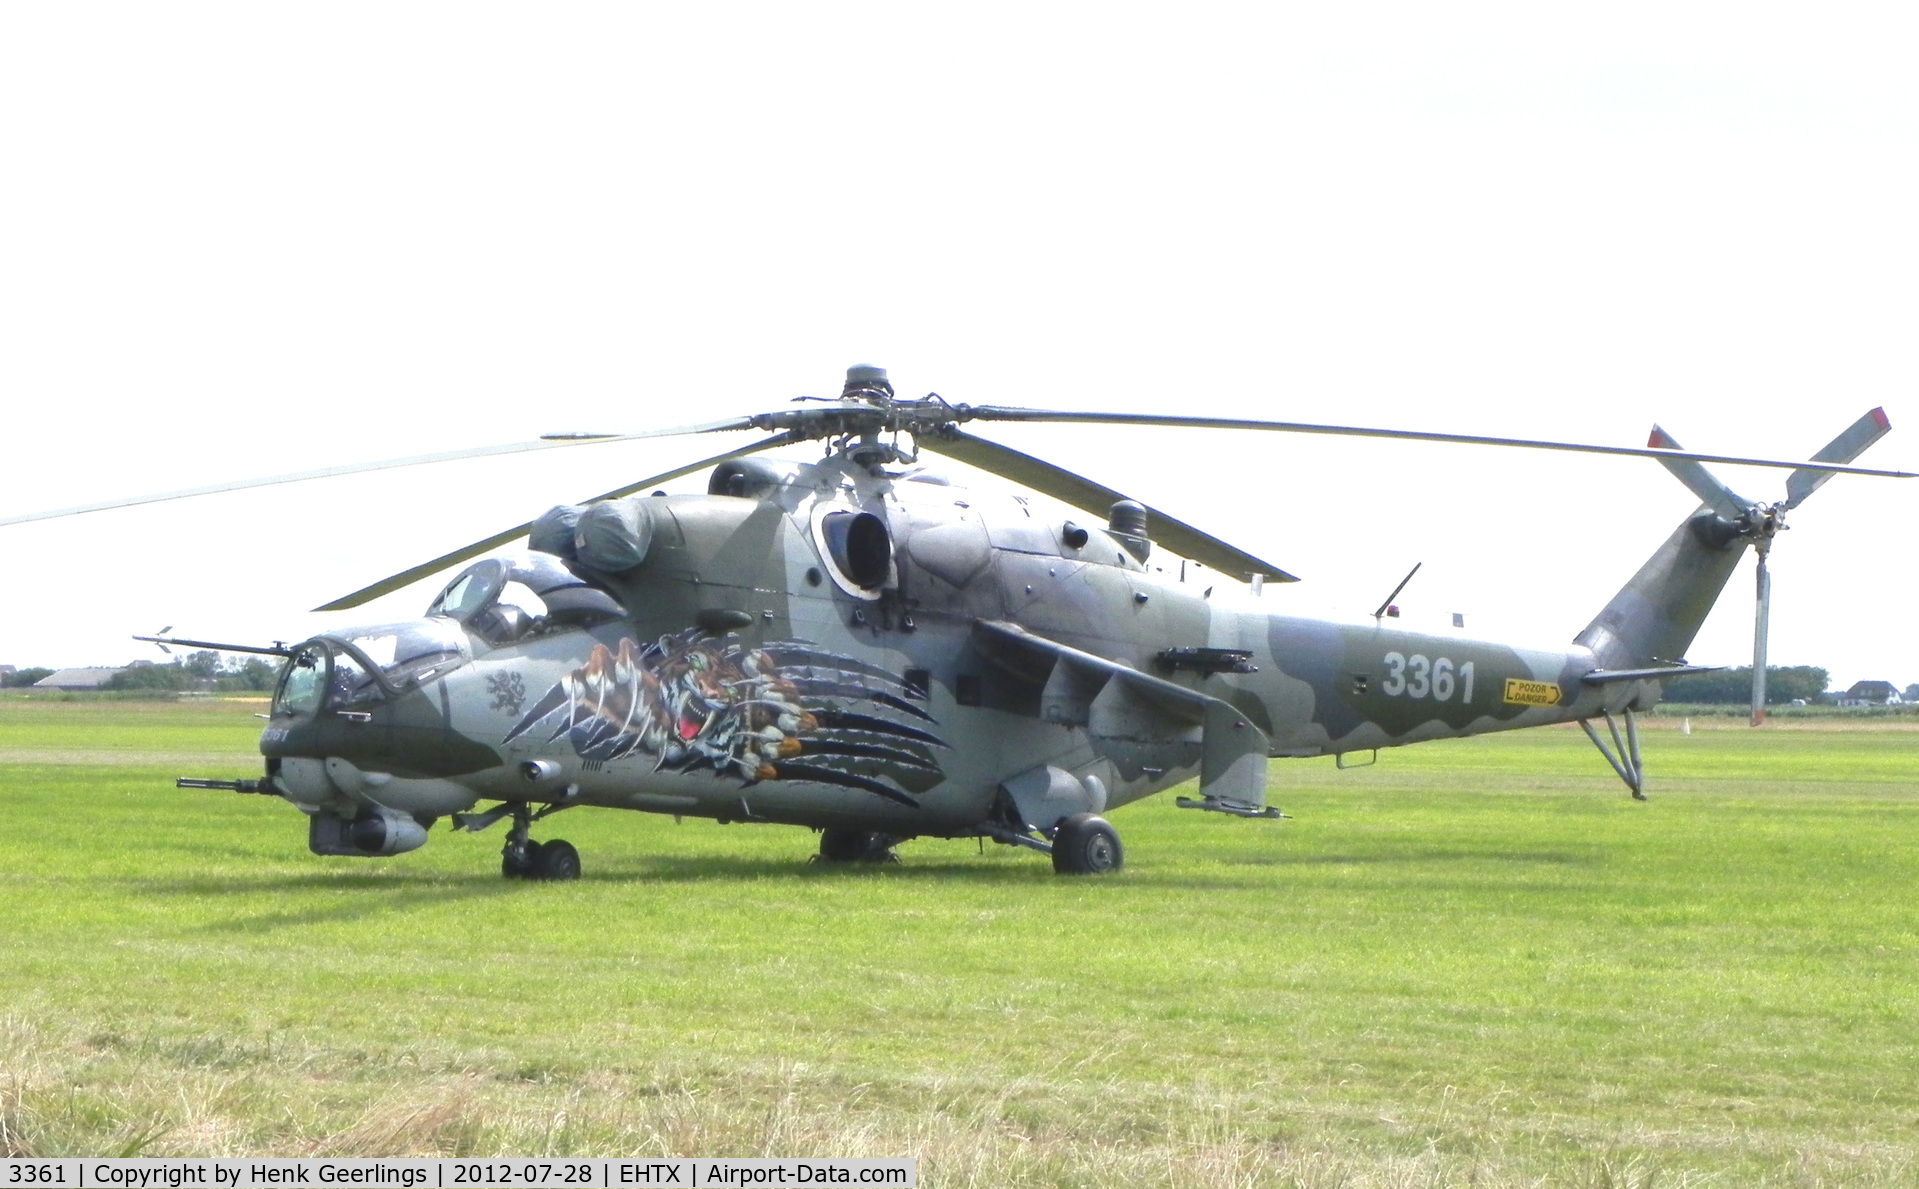 3361, 2005 Mil Mi-35 Hind E C/N 203361, Texel Airshow , 28 July 2012 

Spcl cs 